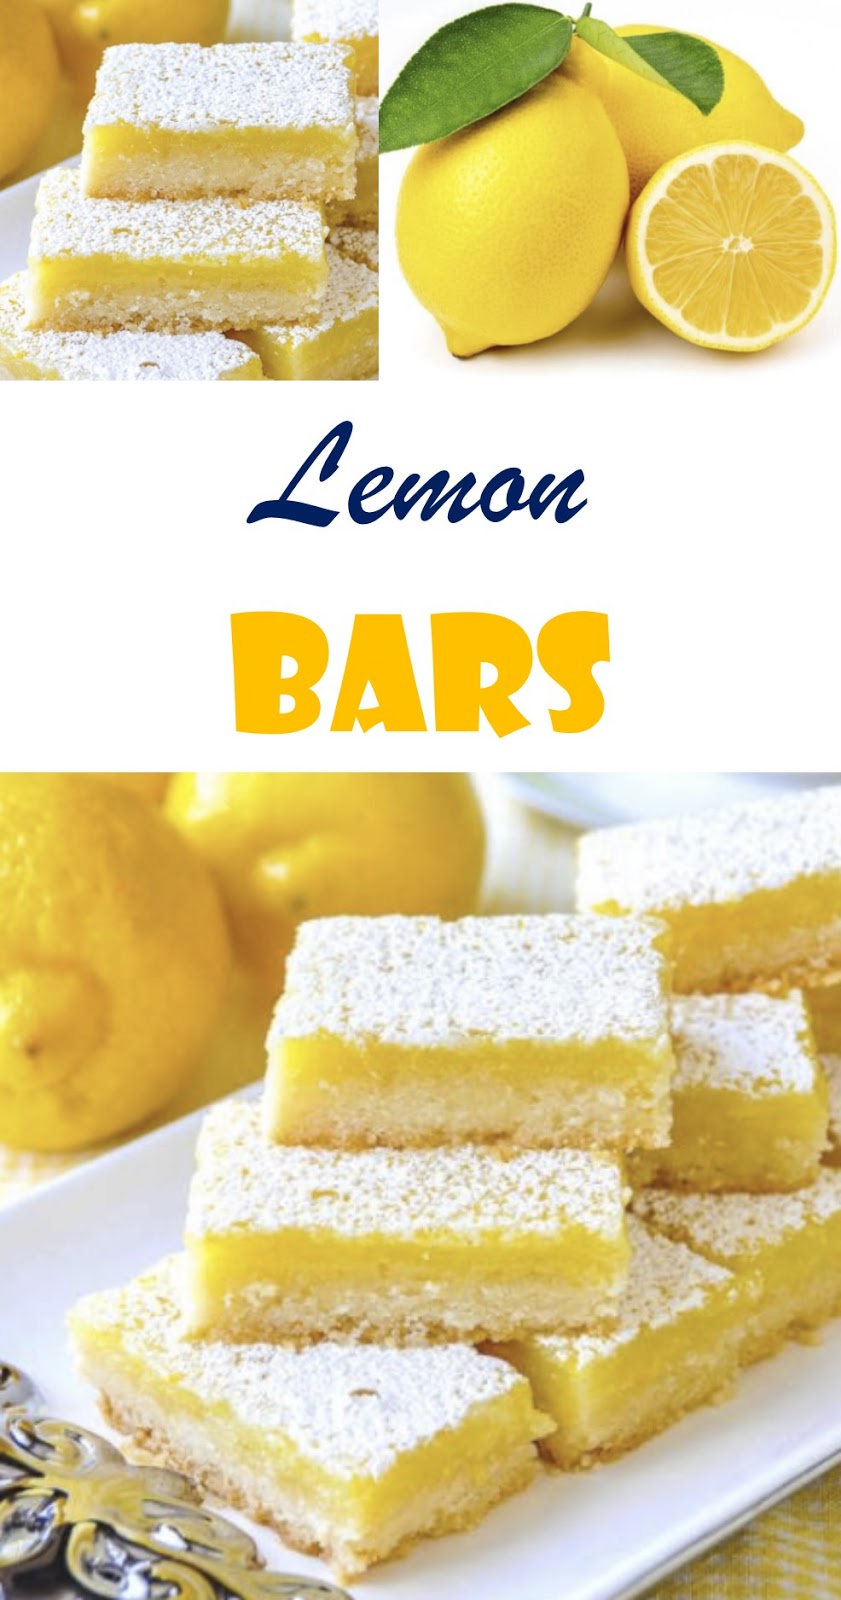 1298 Reviews: THE BEST EVER #Recipes >> Lemon Bars - thebestrecip35